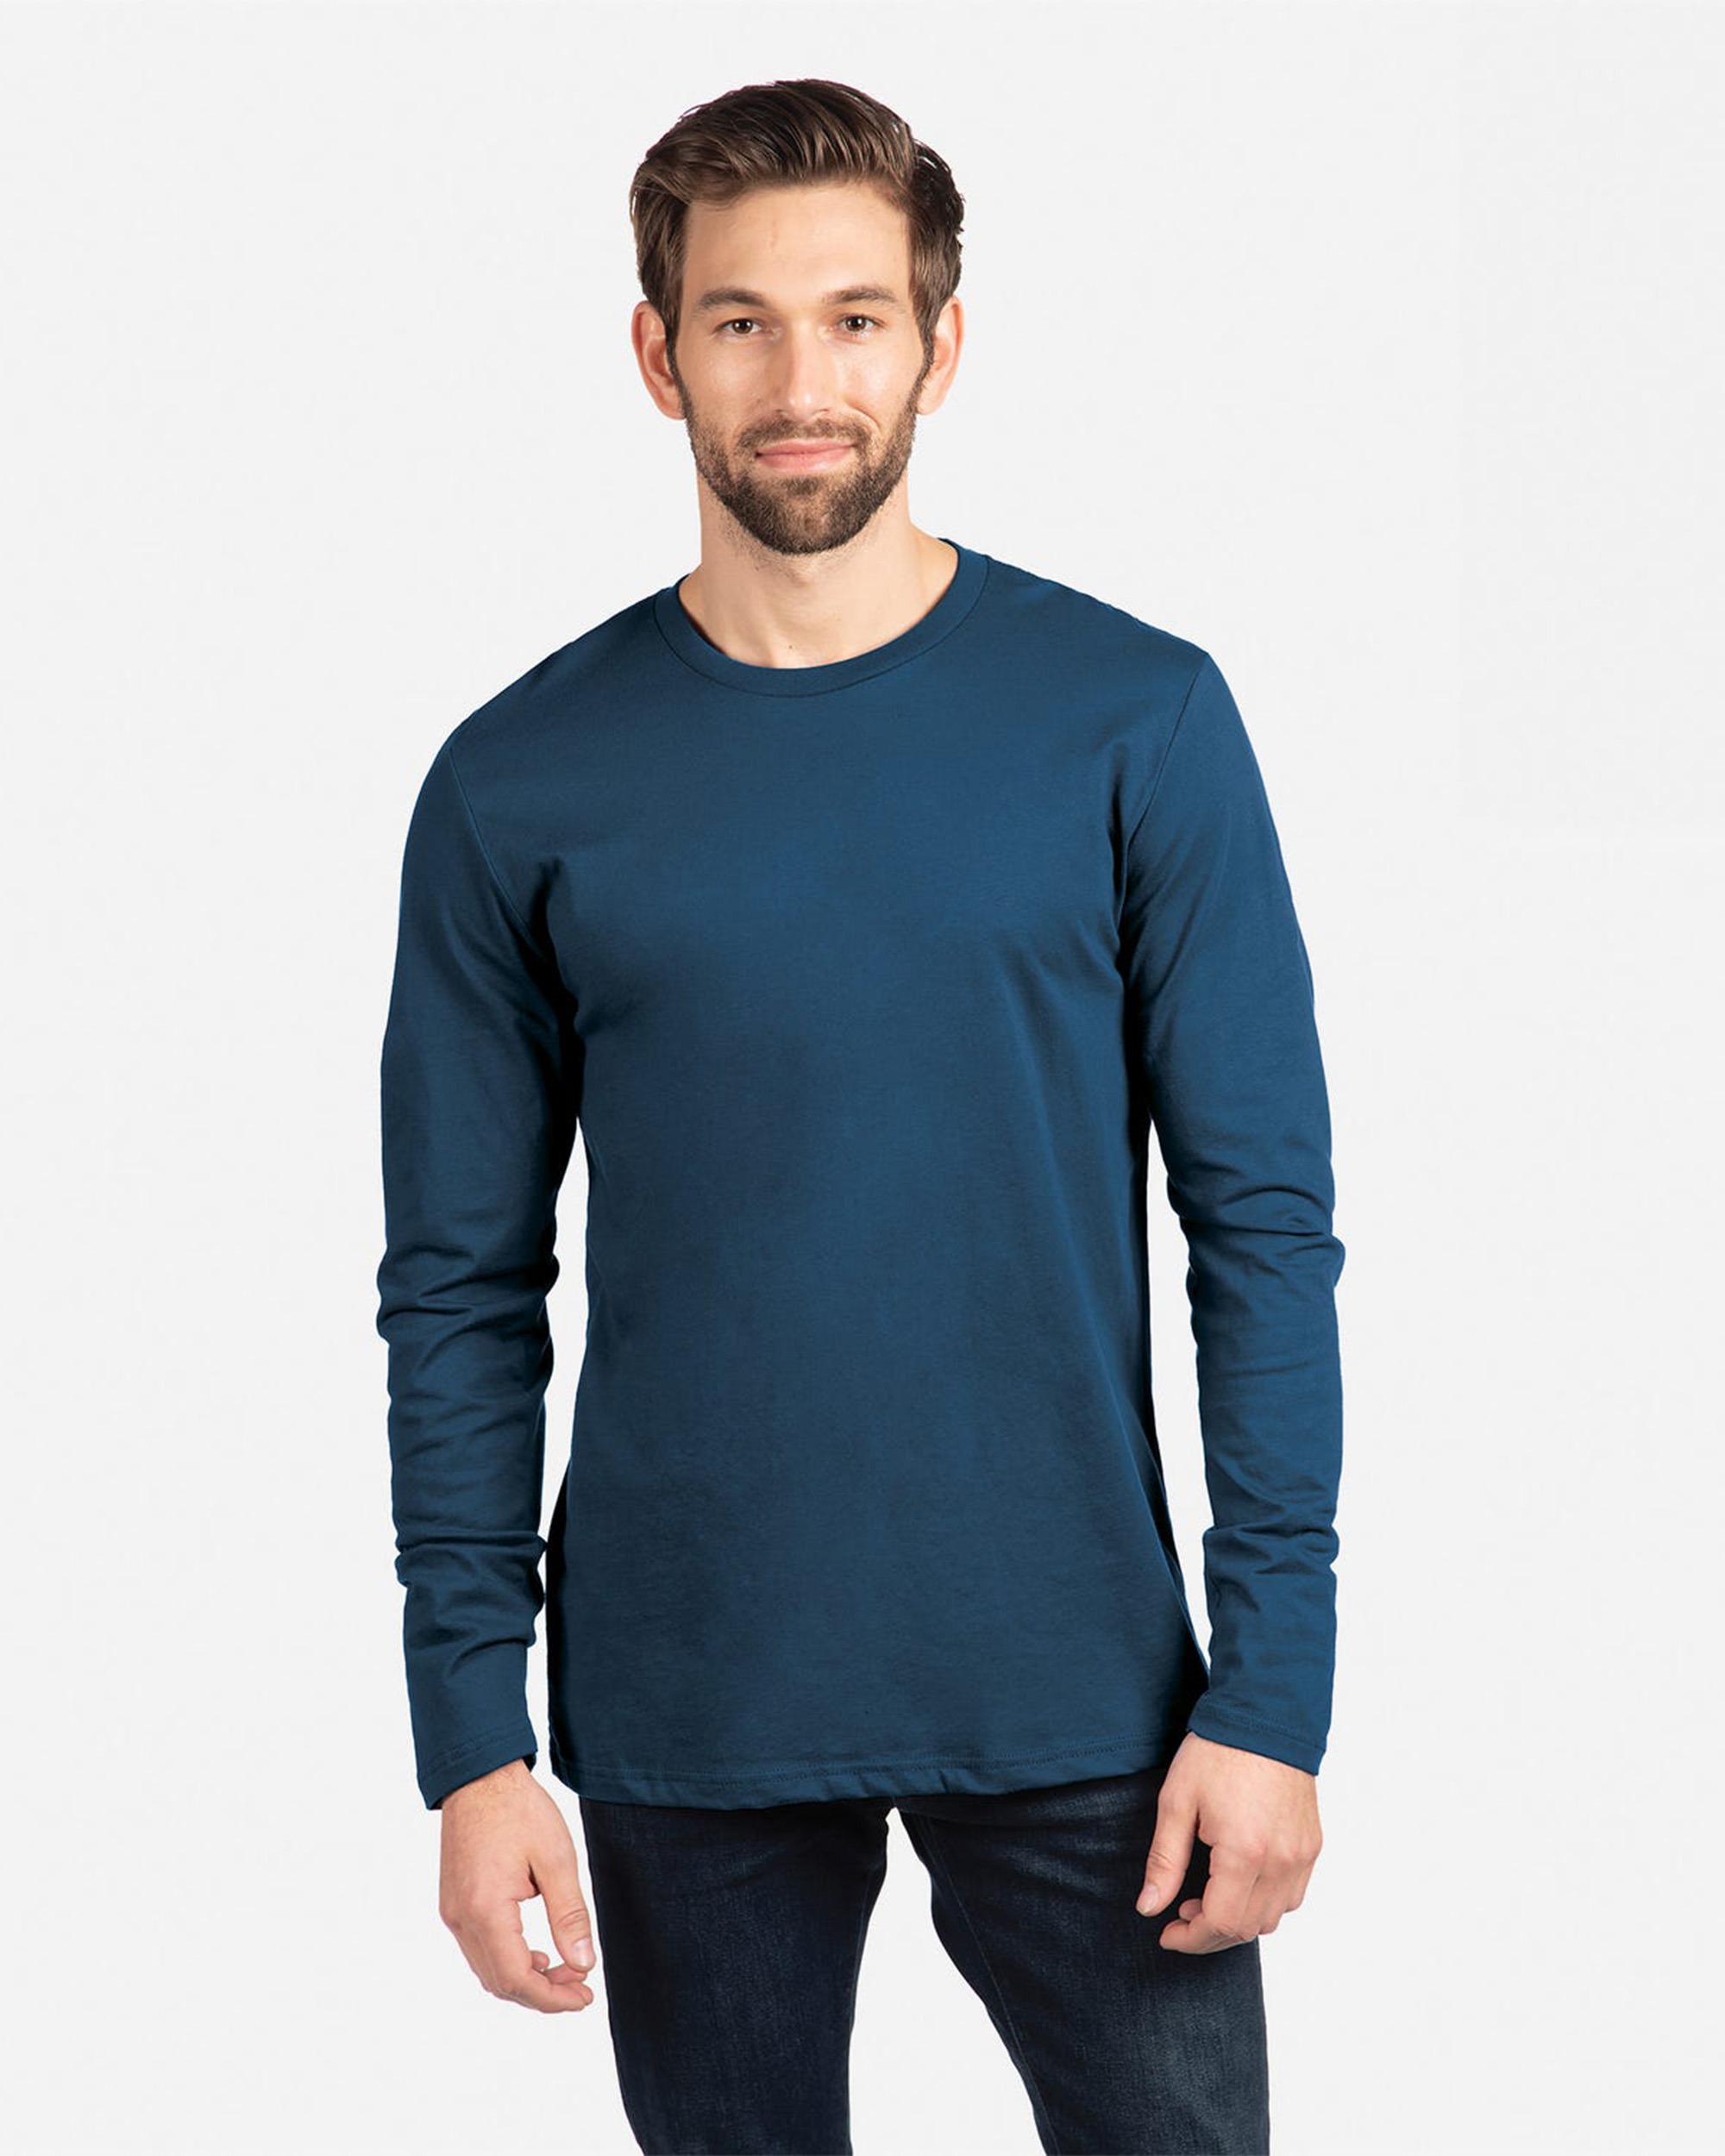 Next Level Apparel® 3601 Unisex Cotton Long Sleeve T-Shirt